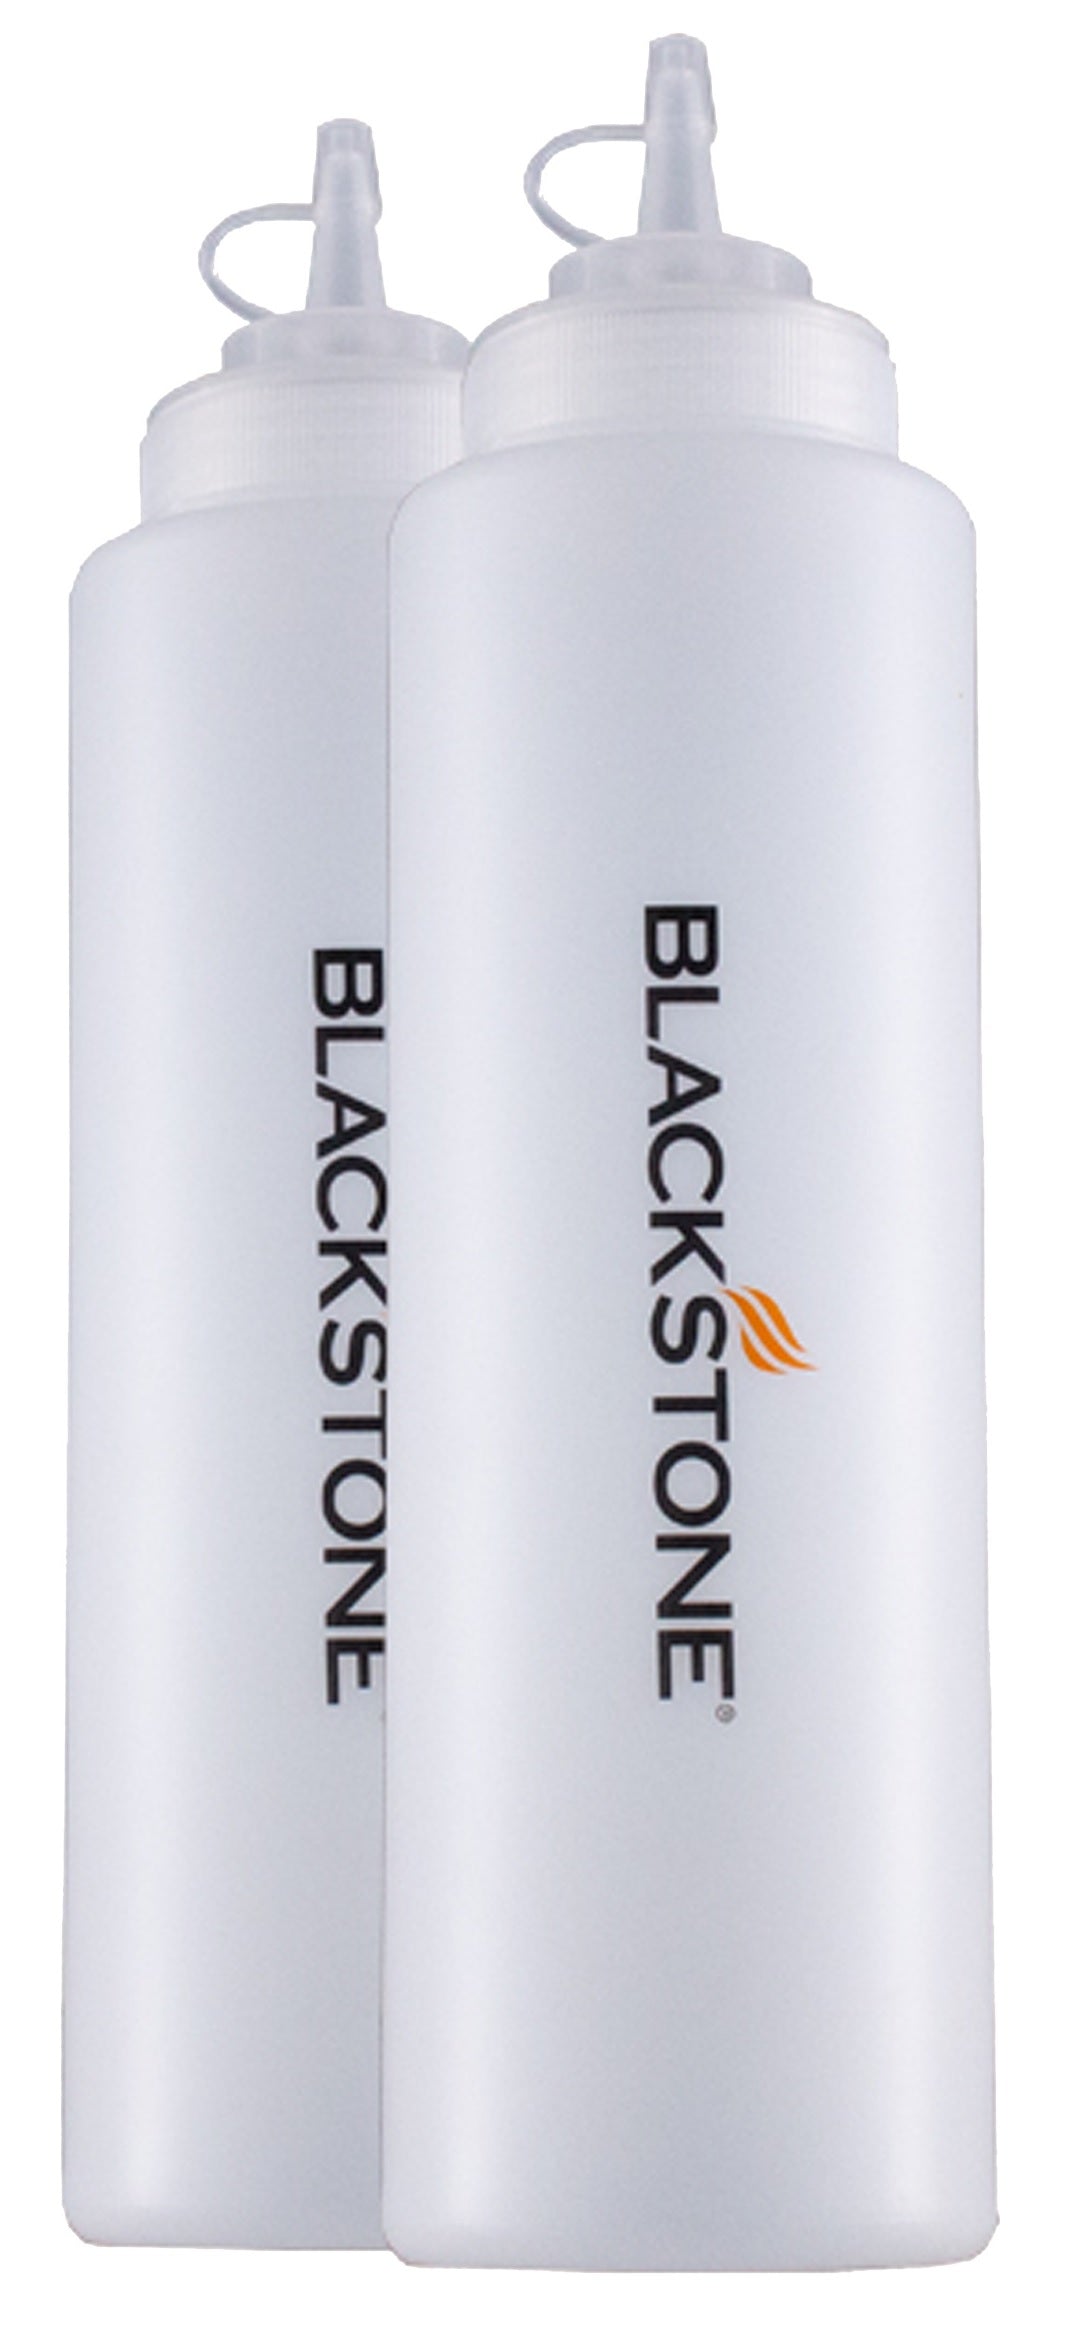 Blackstone 5071 Basting Squeeze Bottle, Plastic, White, 2-Count